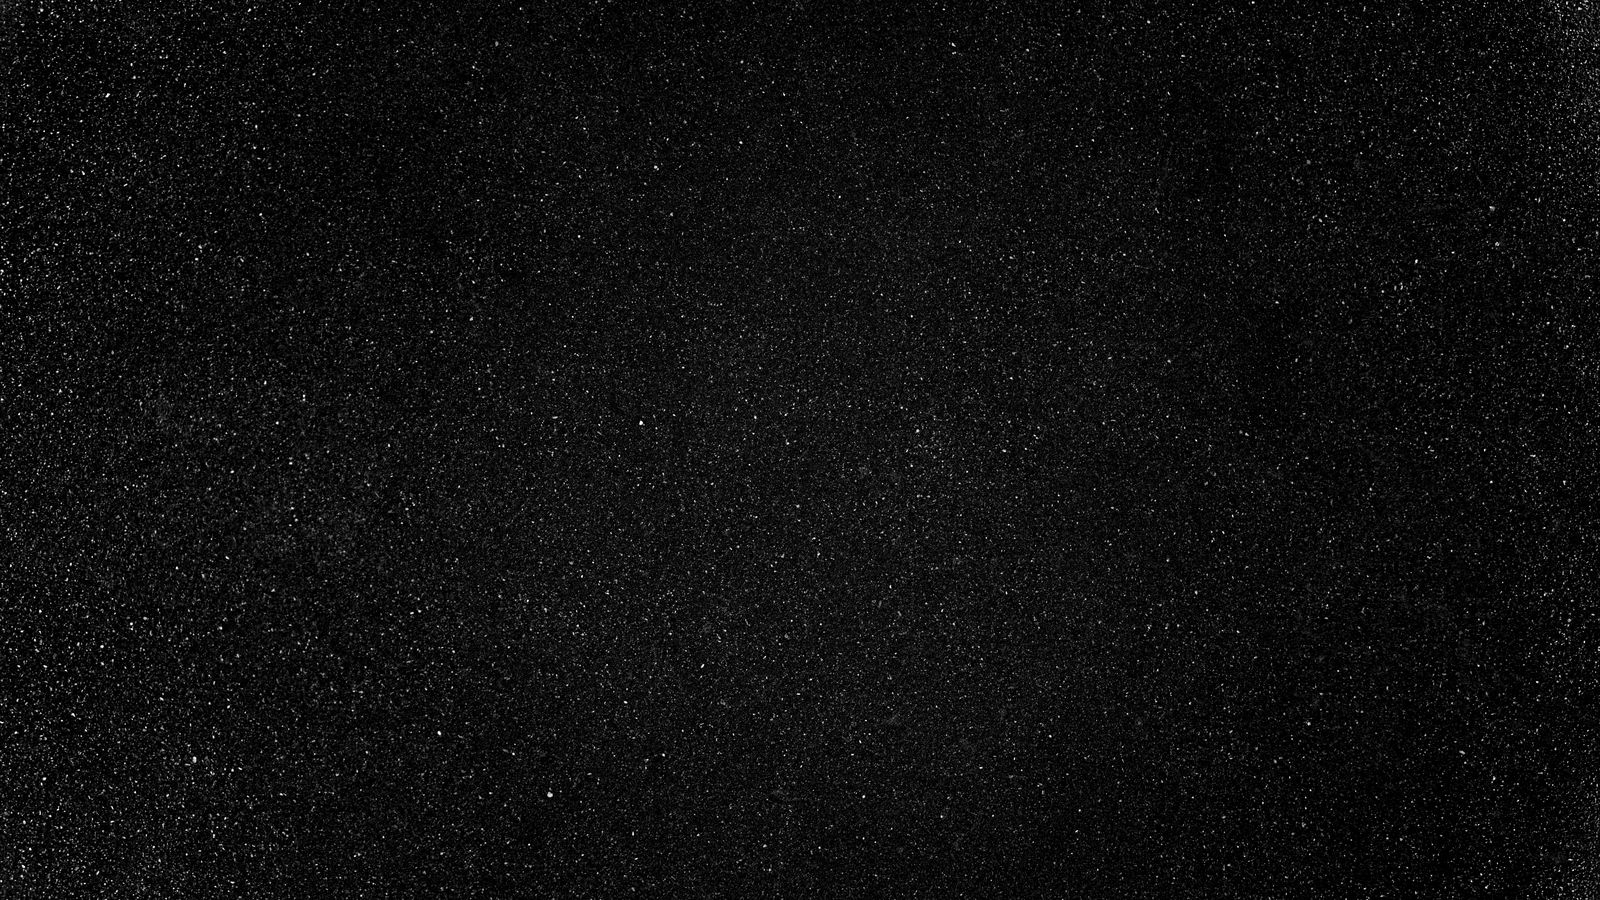 HD wallpaper stars at night time starry sky under black sky space night  sky  Wallpaper Flare